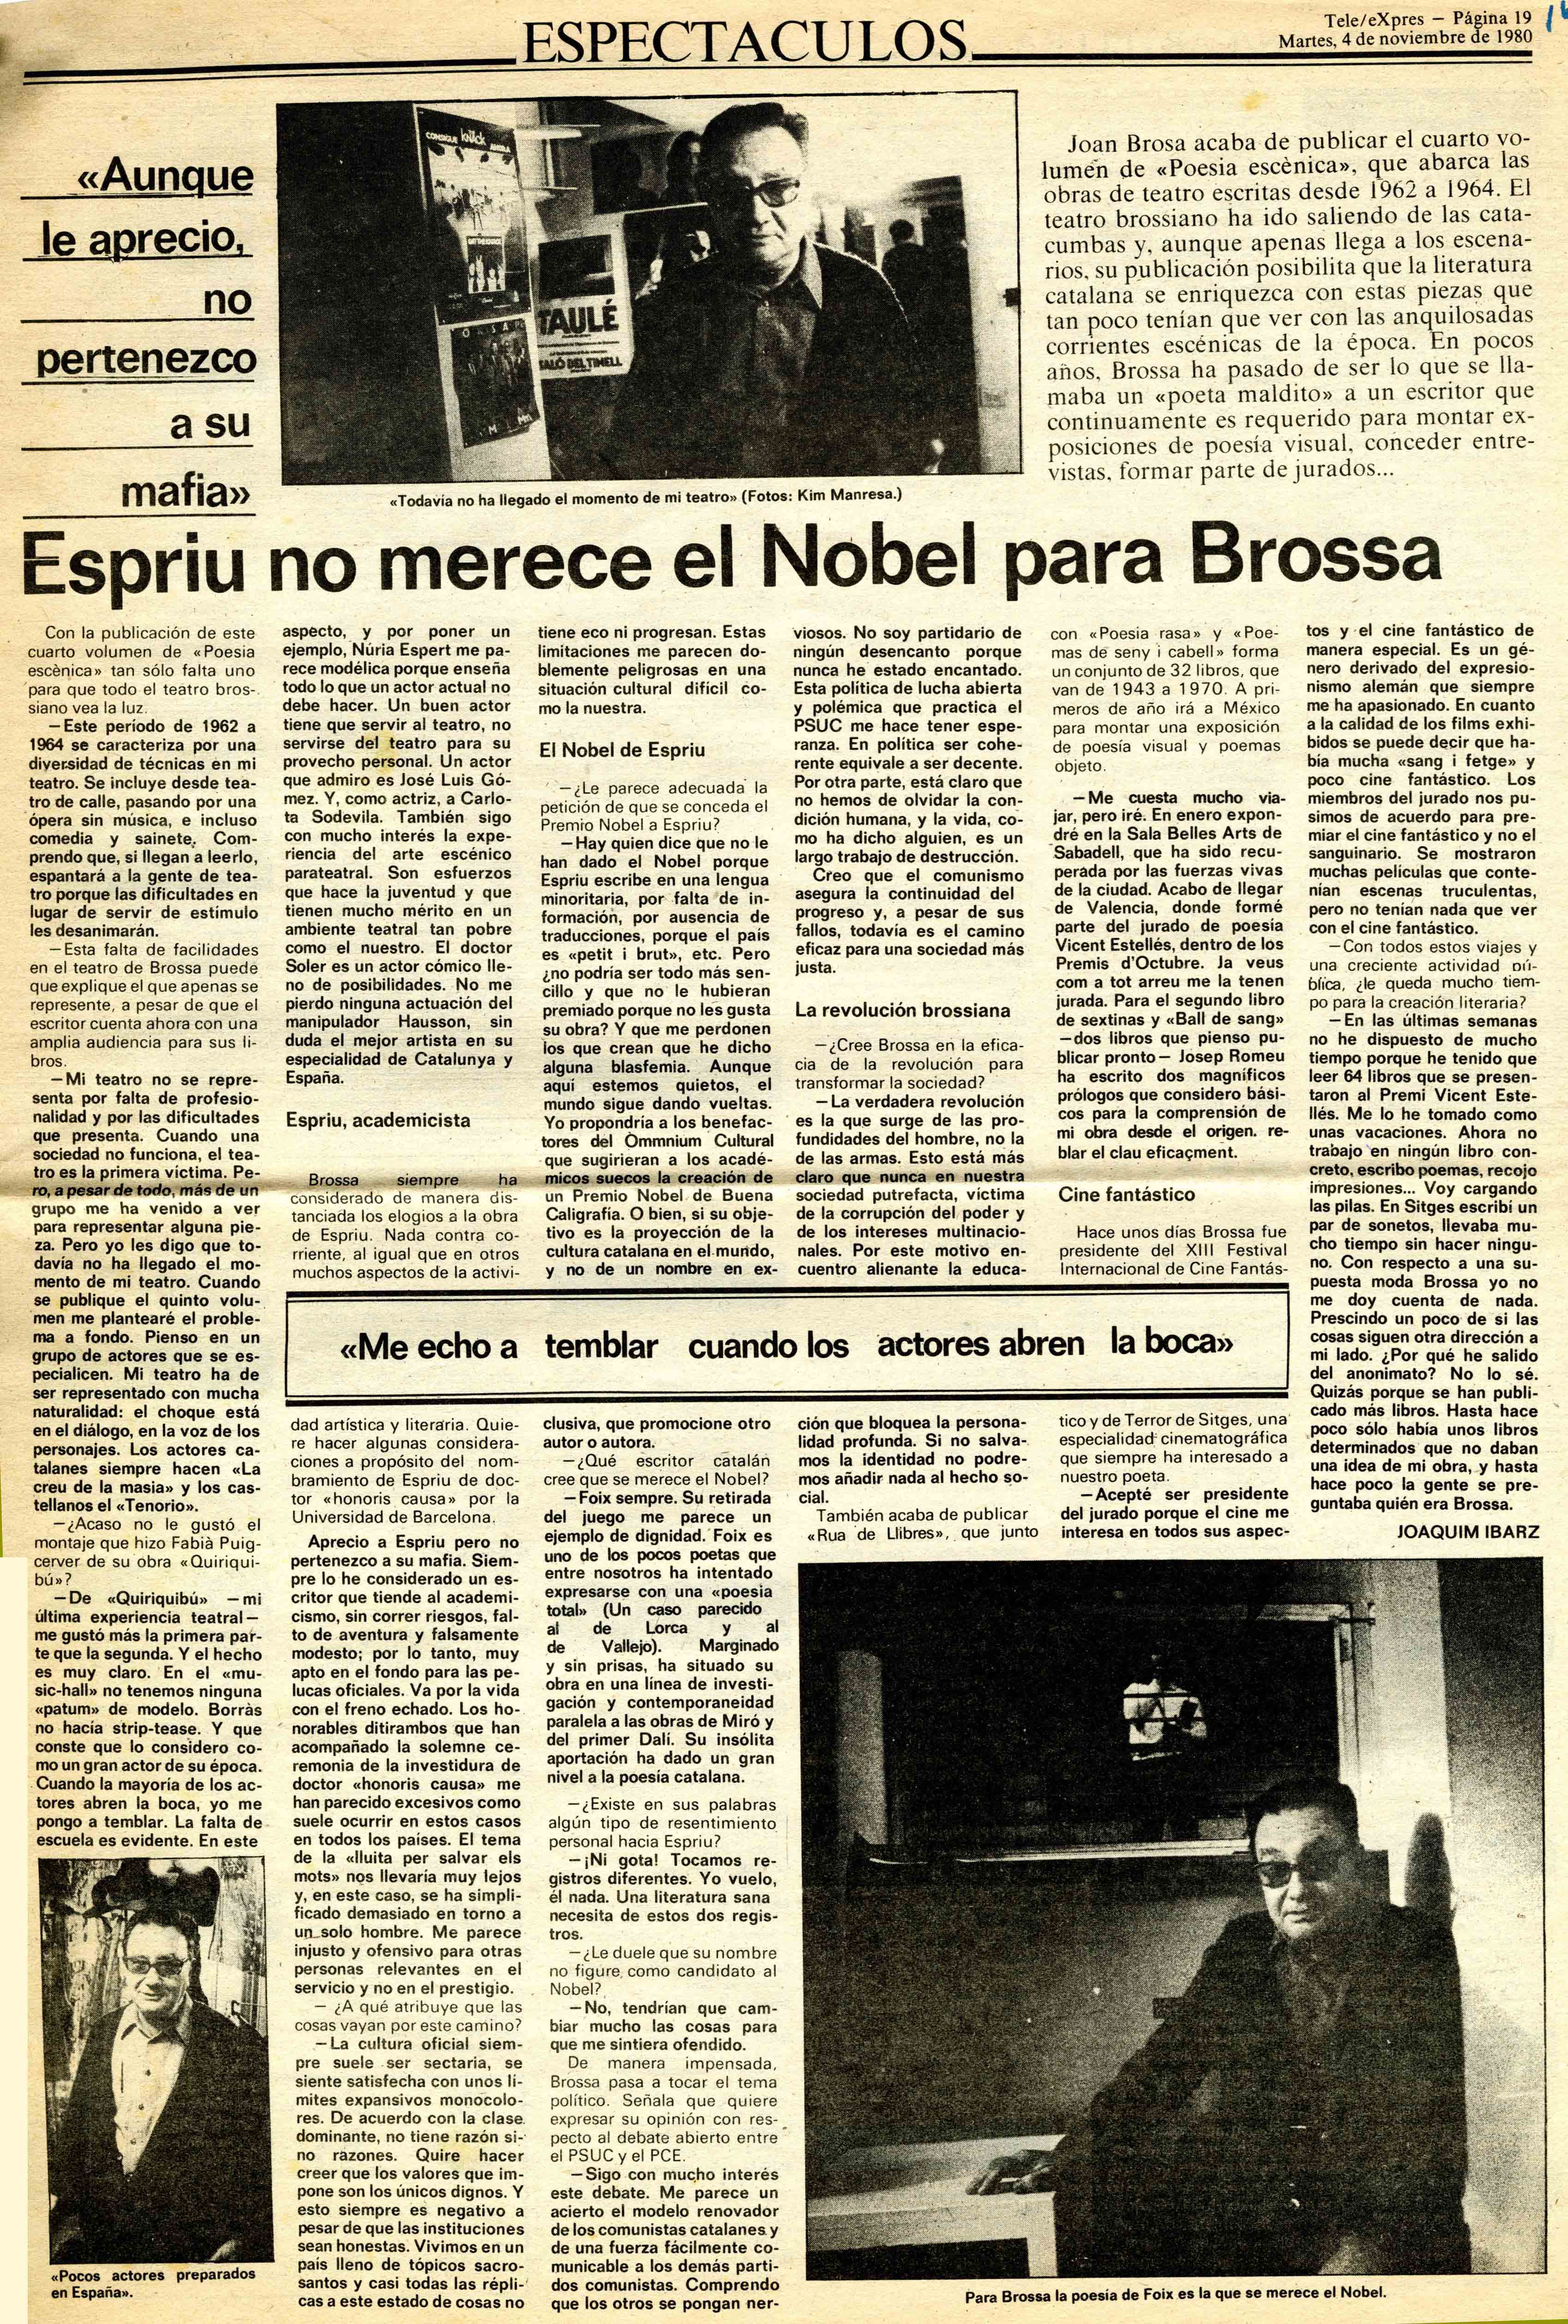 Ibarz, Joaquim. Espriu no merece el Nobel para Brossa. Tele/eXpres, 04/11/1980